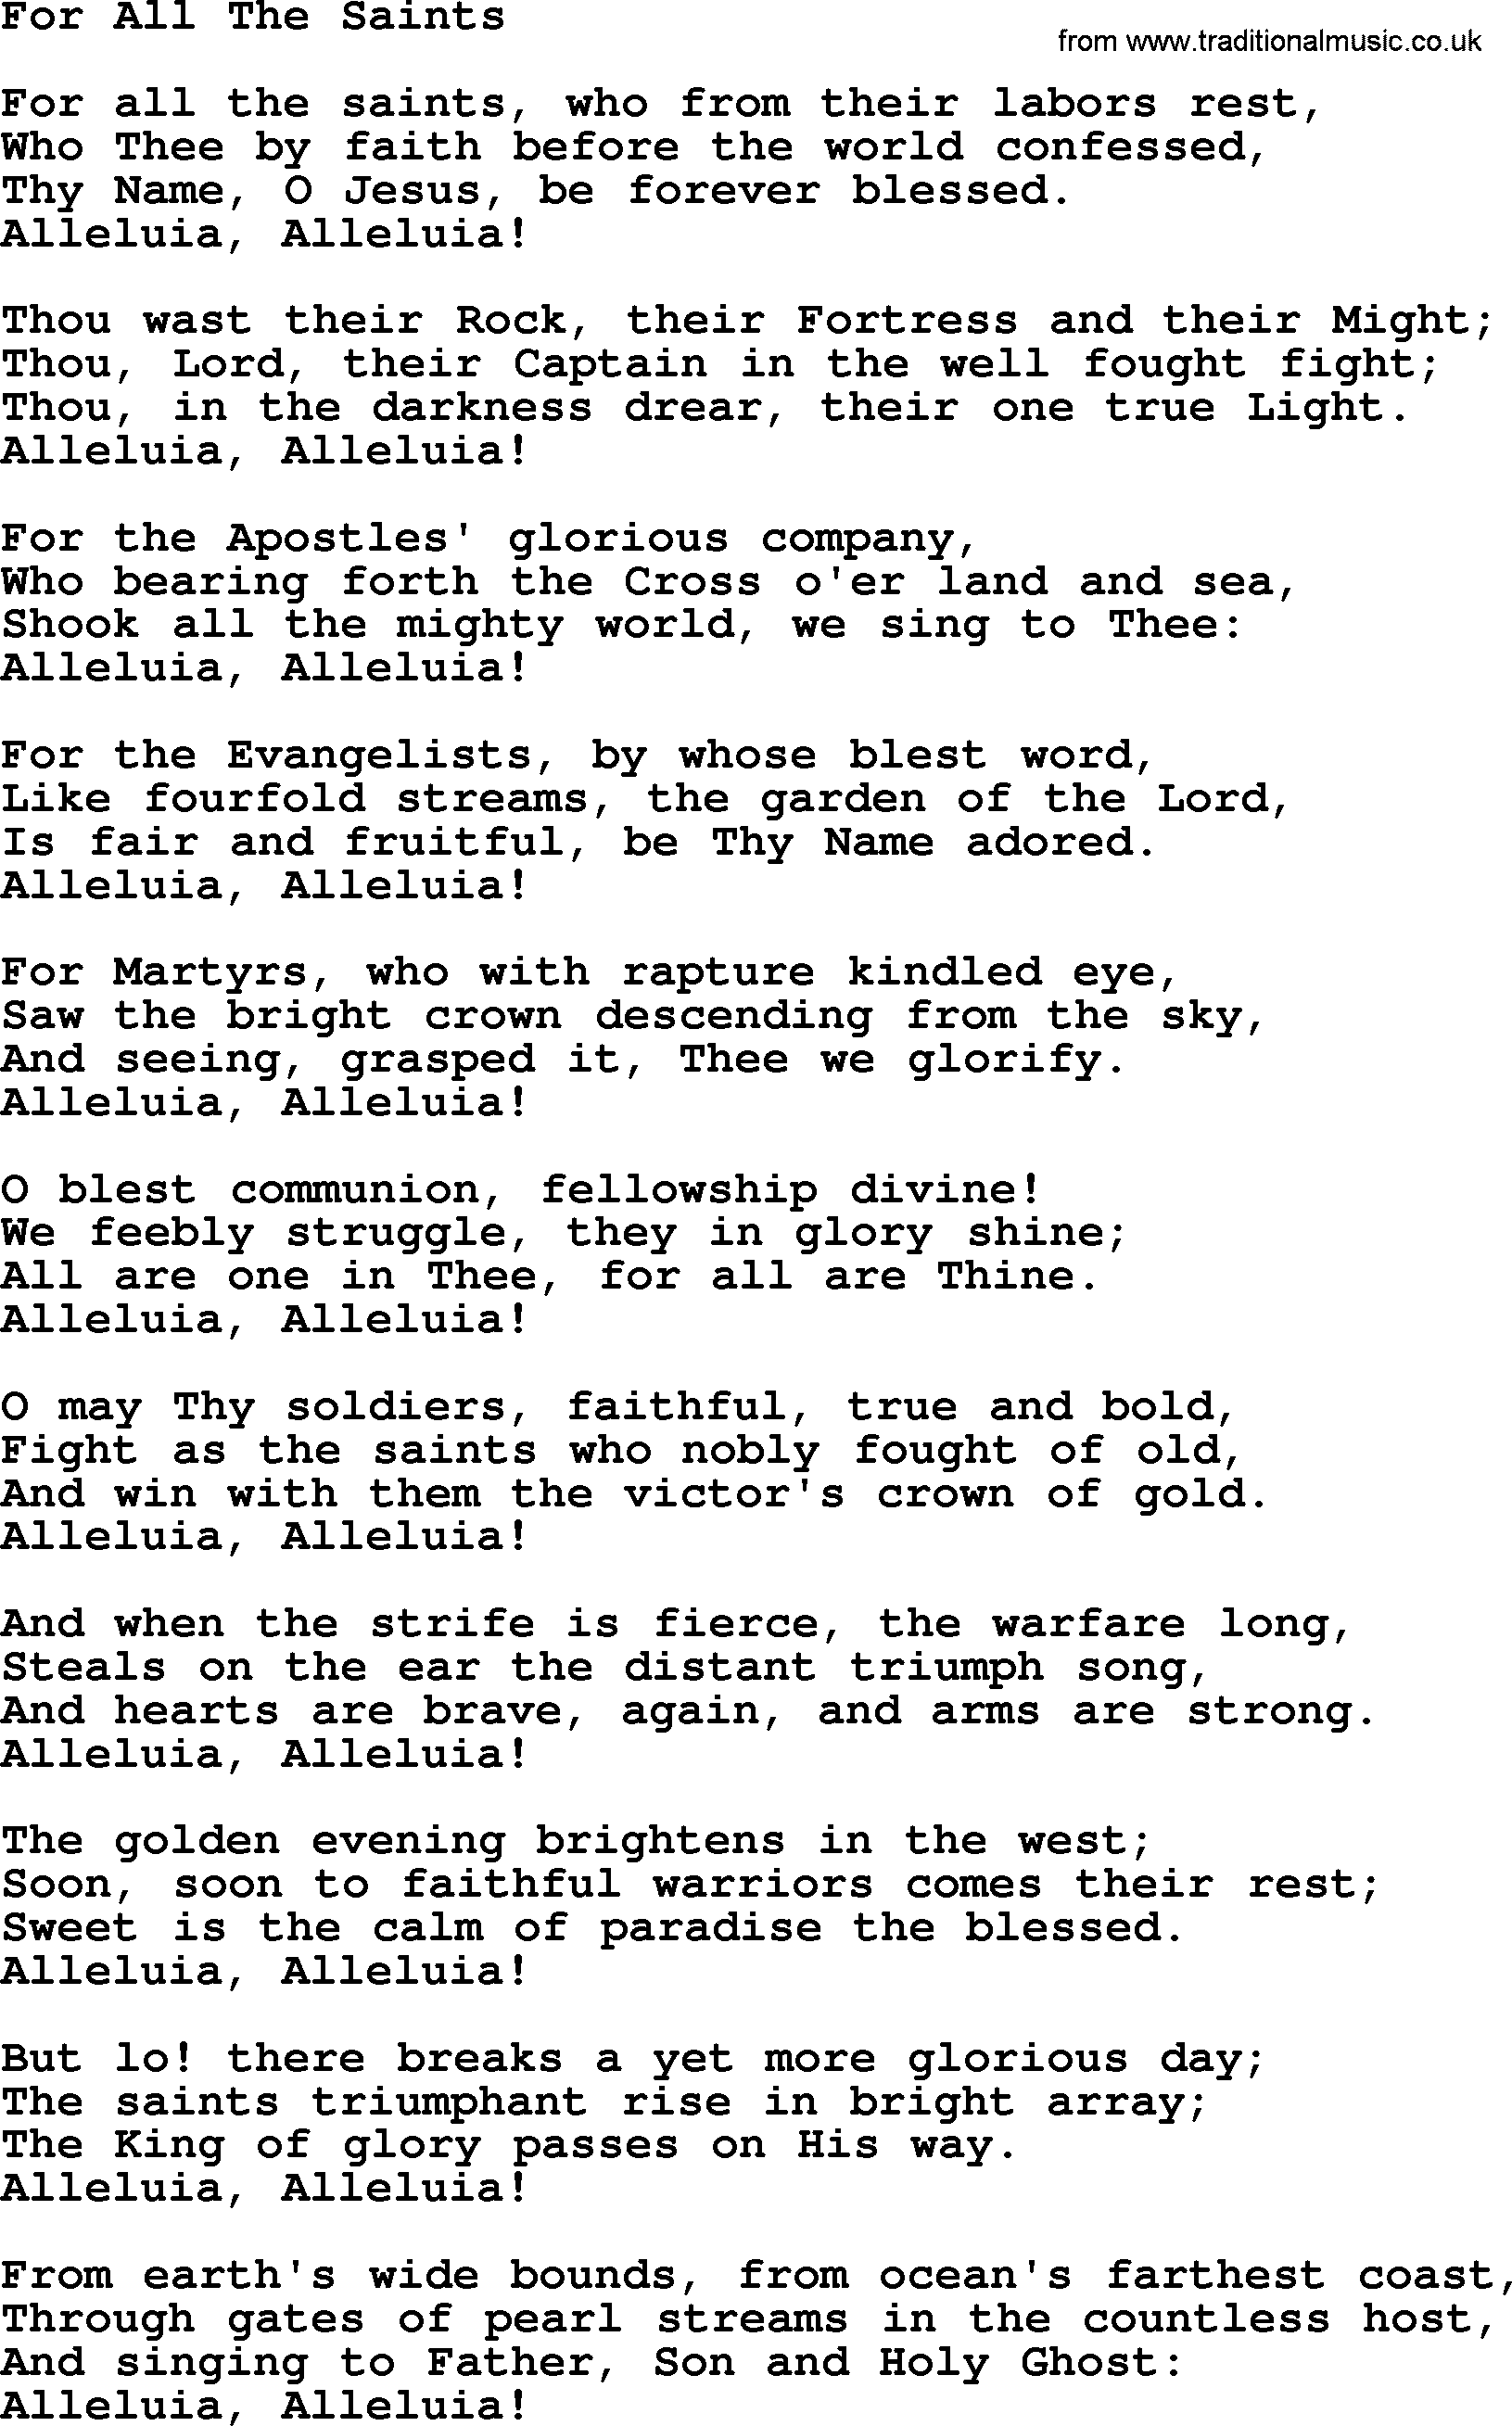 Catholic Hymn: For All The Saints lyrics with PDF